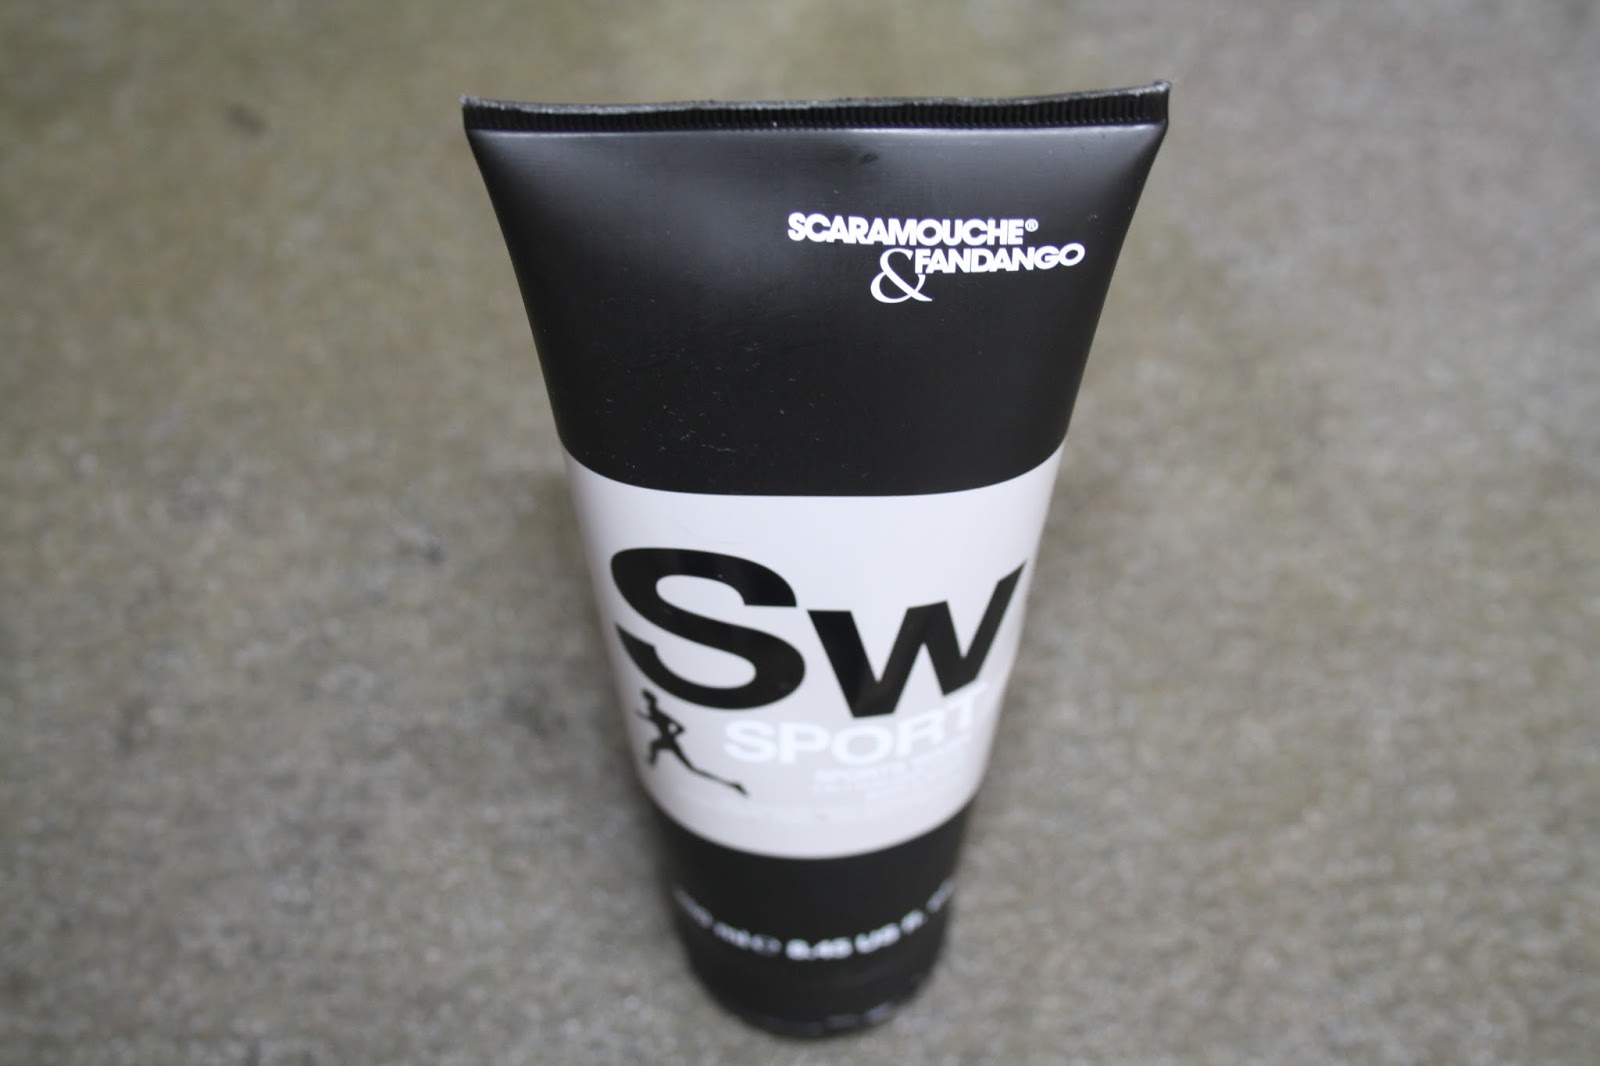 Scaramouche & Fandango 'SW' Sports Wash